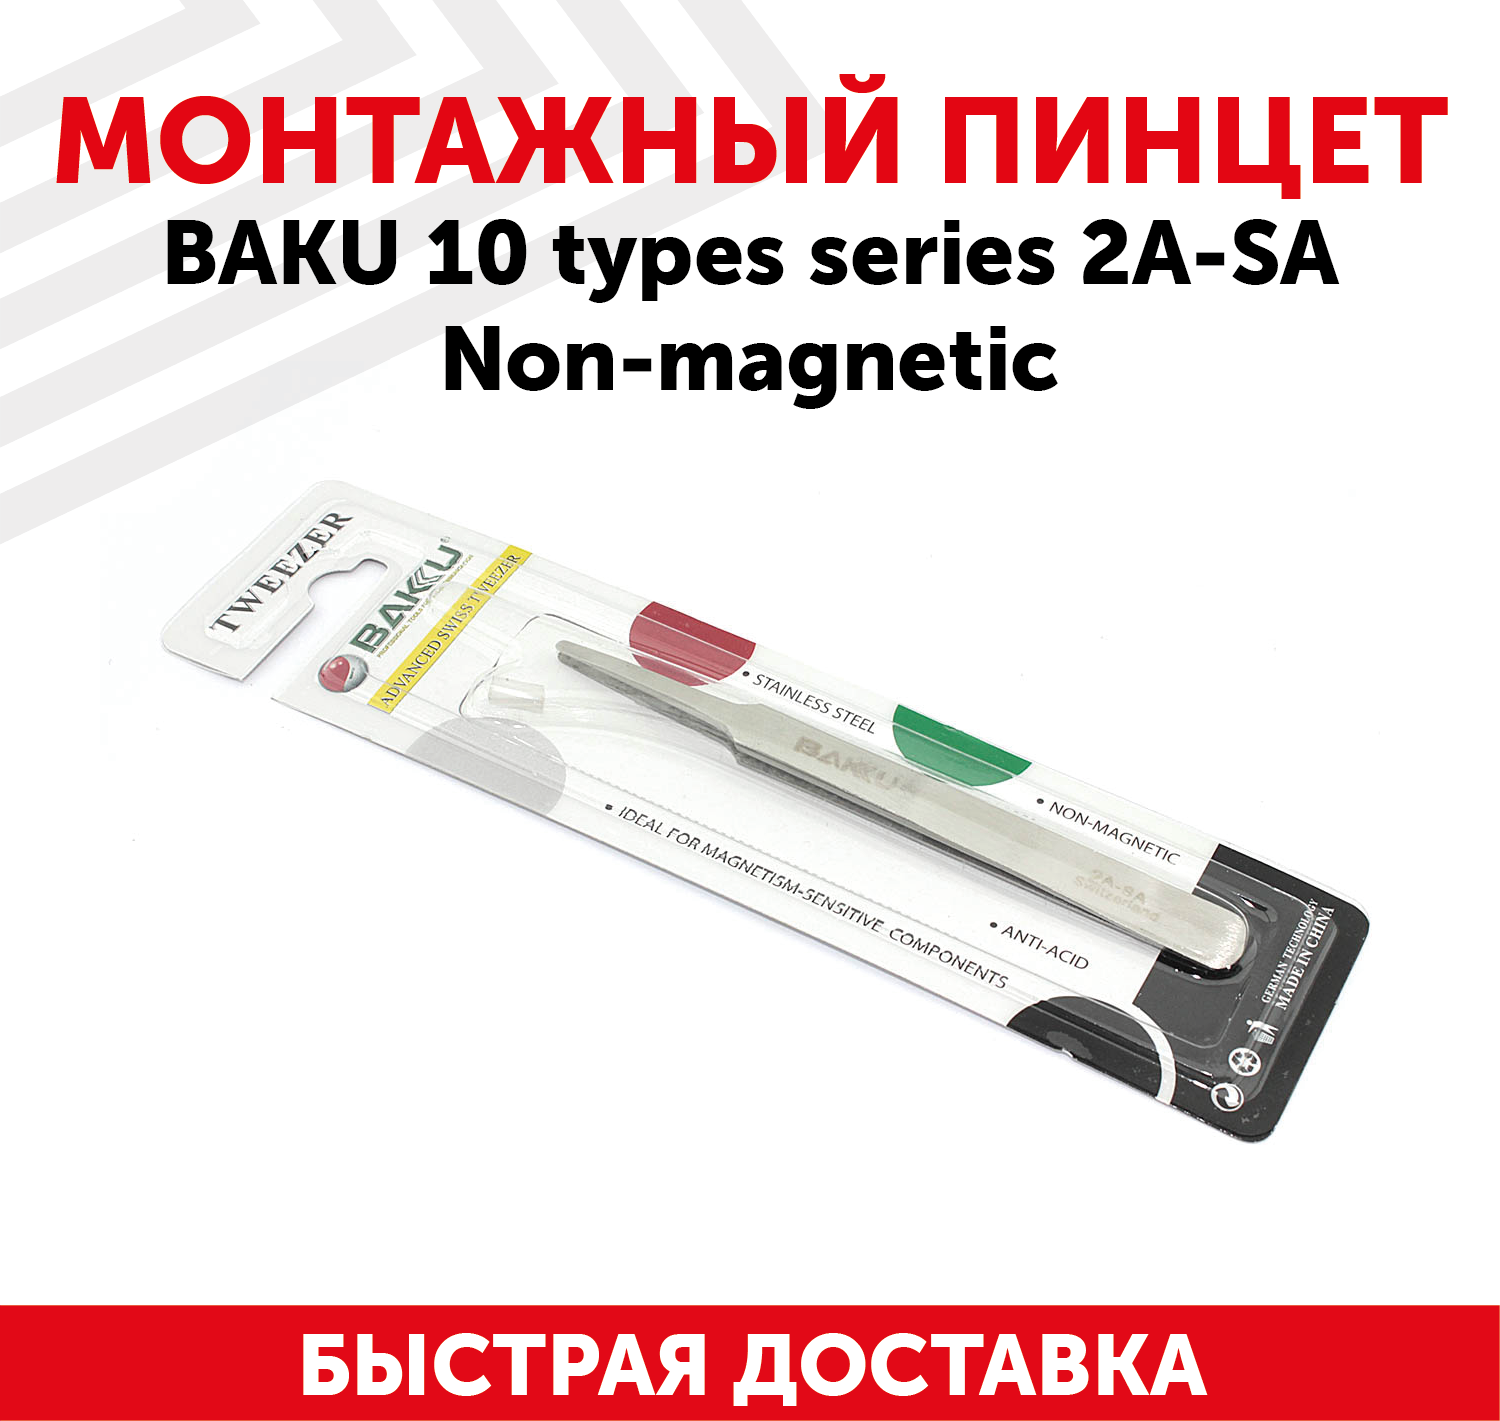 Пинцет Baku 10 types Series 2A-SA